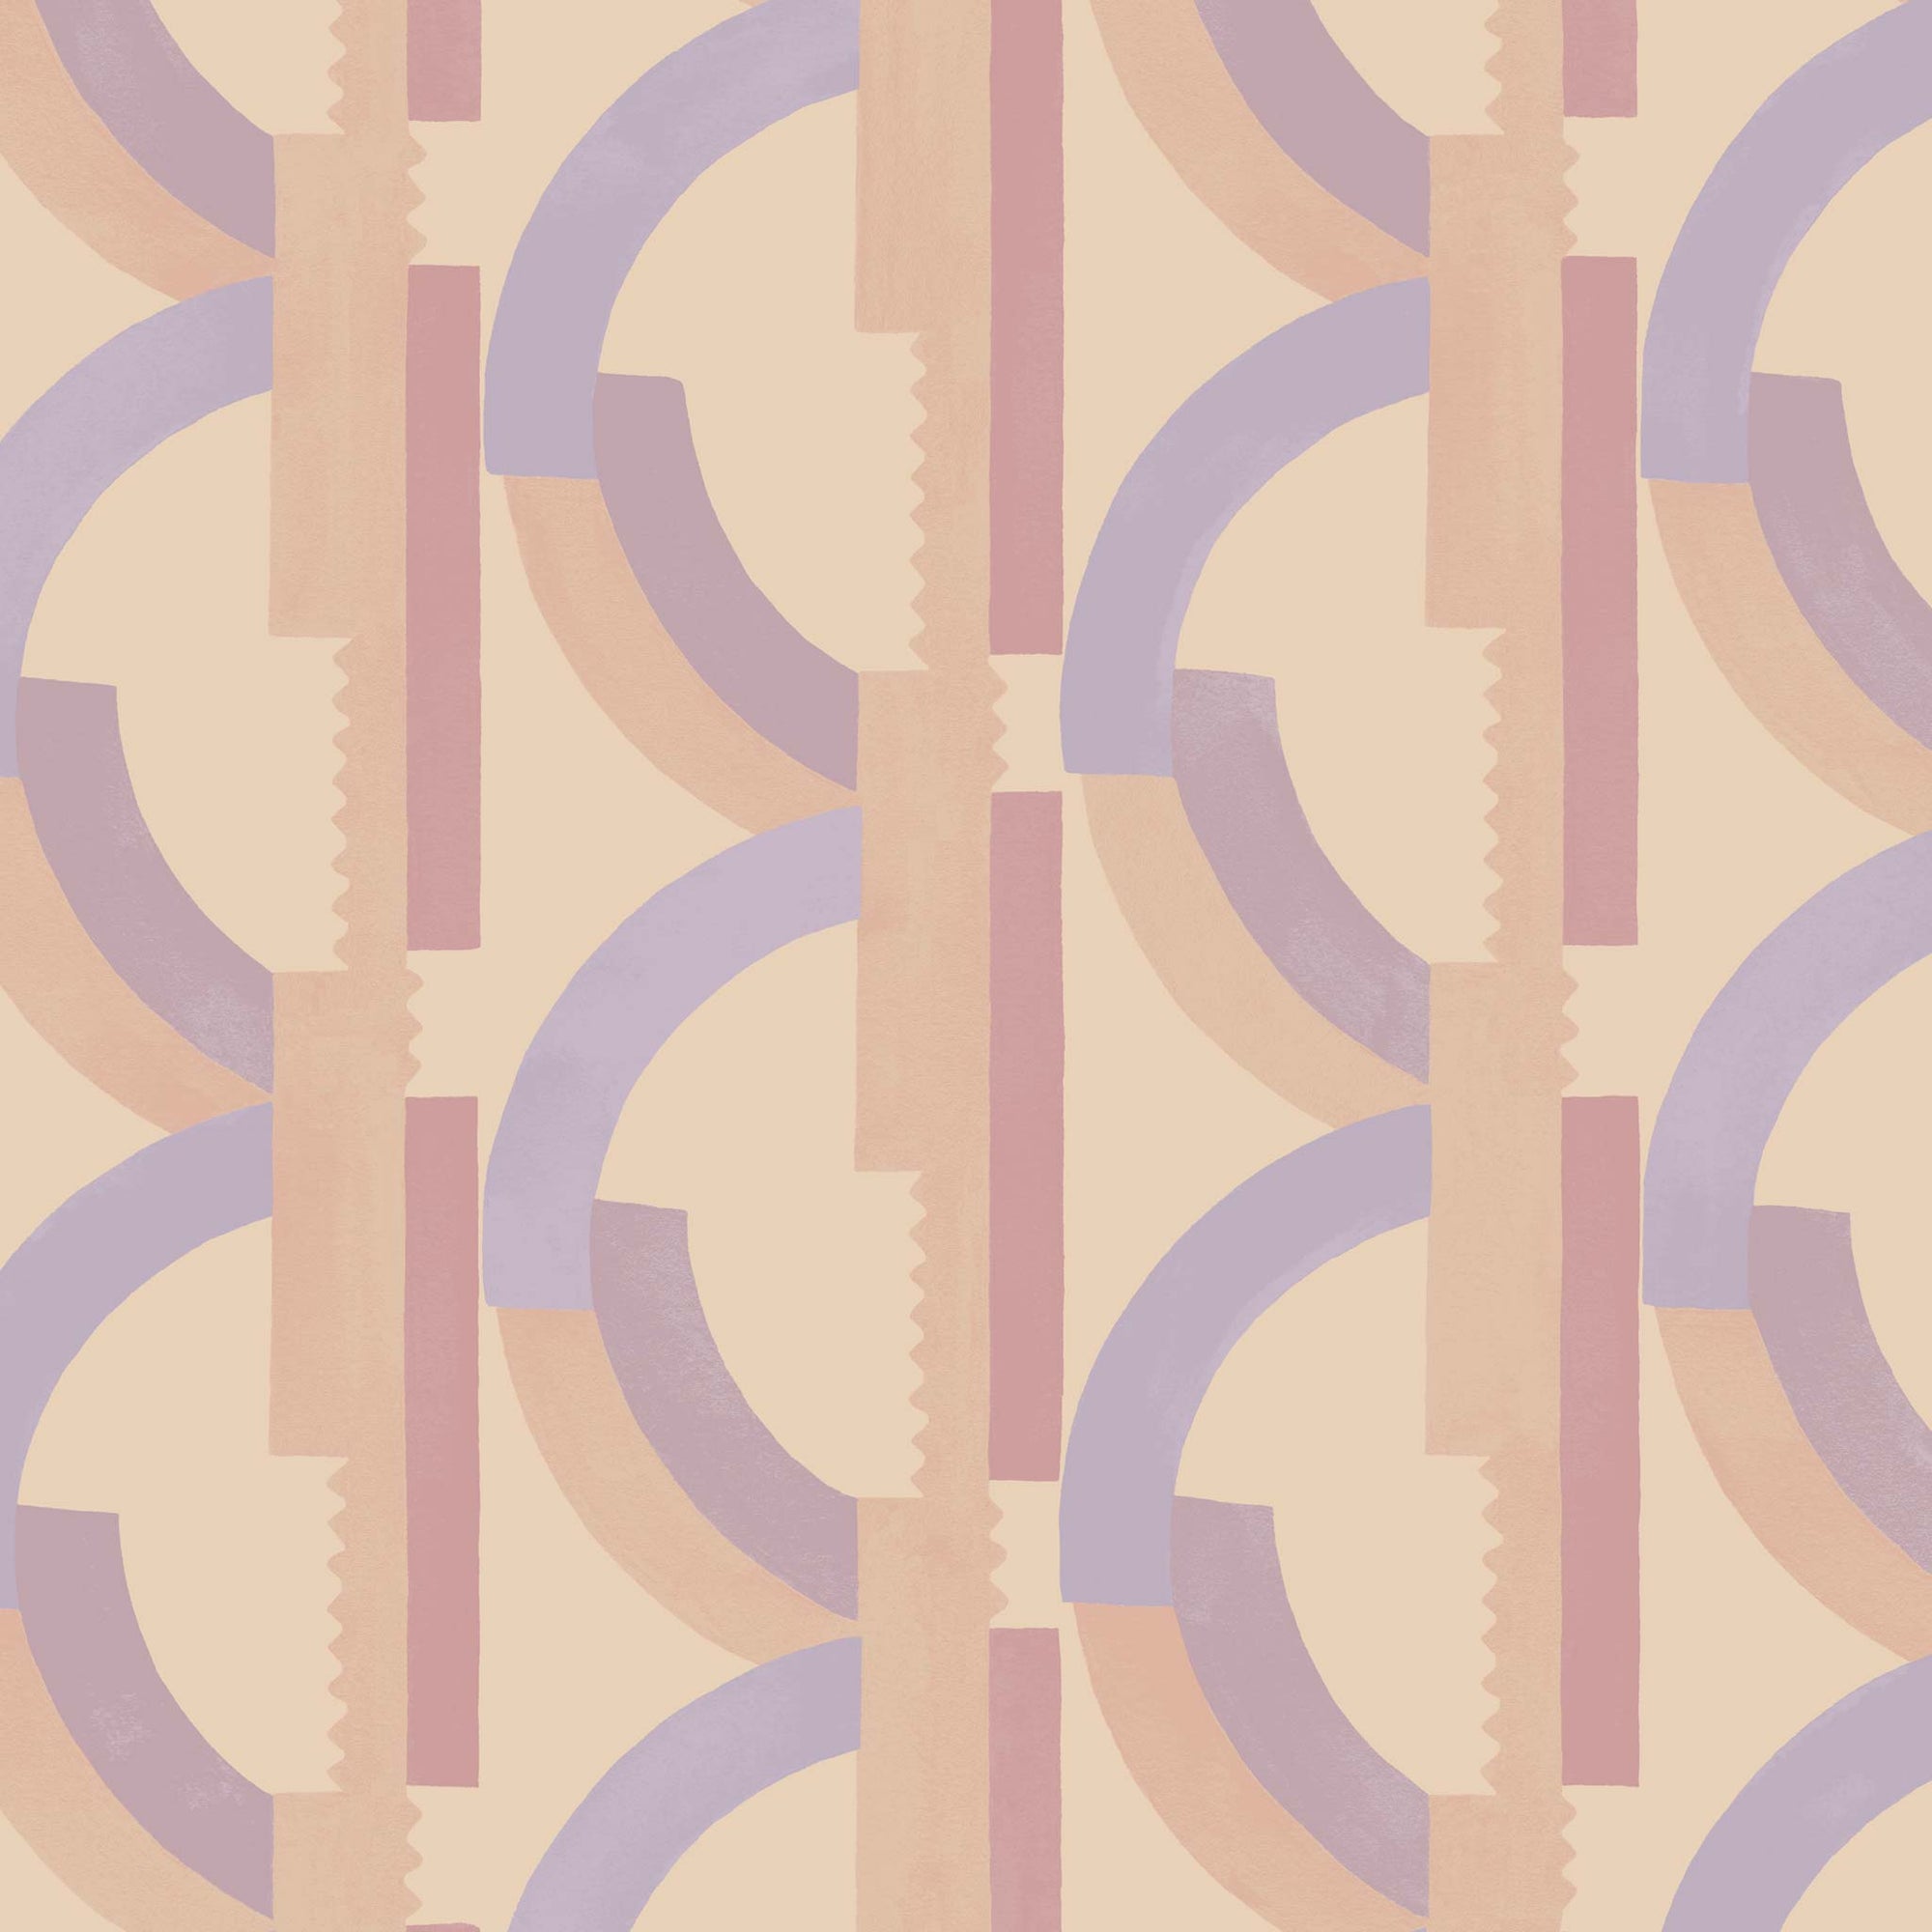 Habita wallpaper design - Lucie pattern in Peach